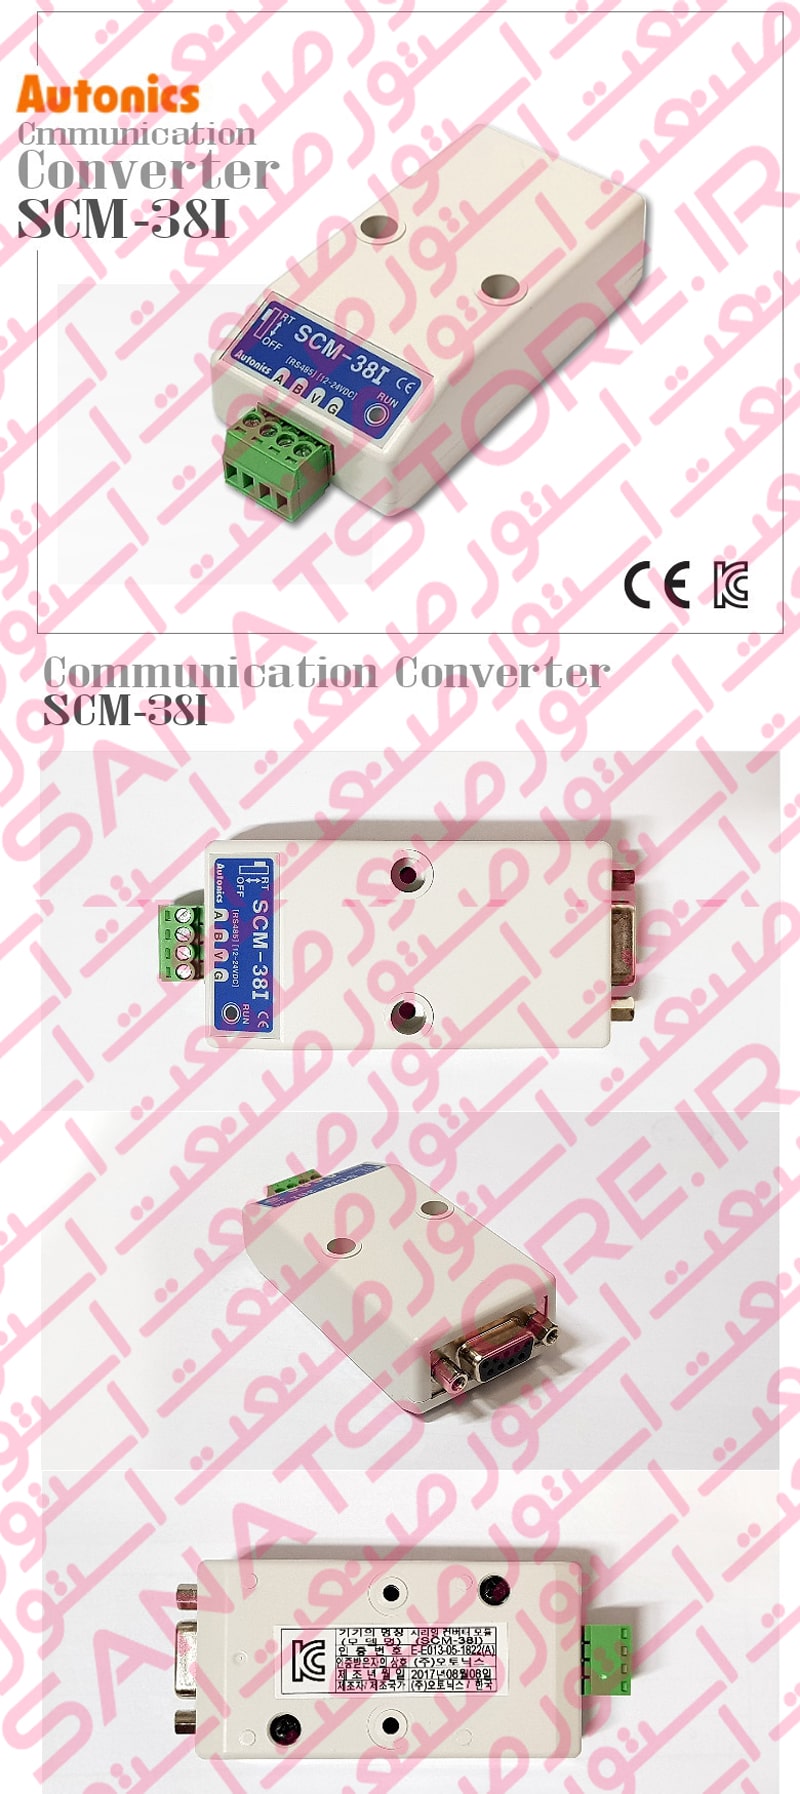 Autonics Communication converter SCM-38I